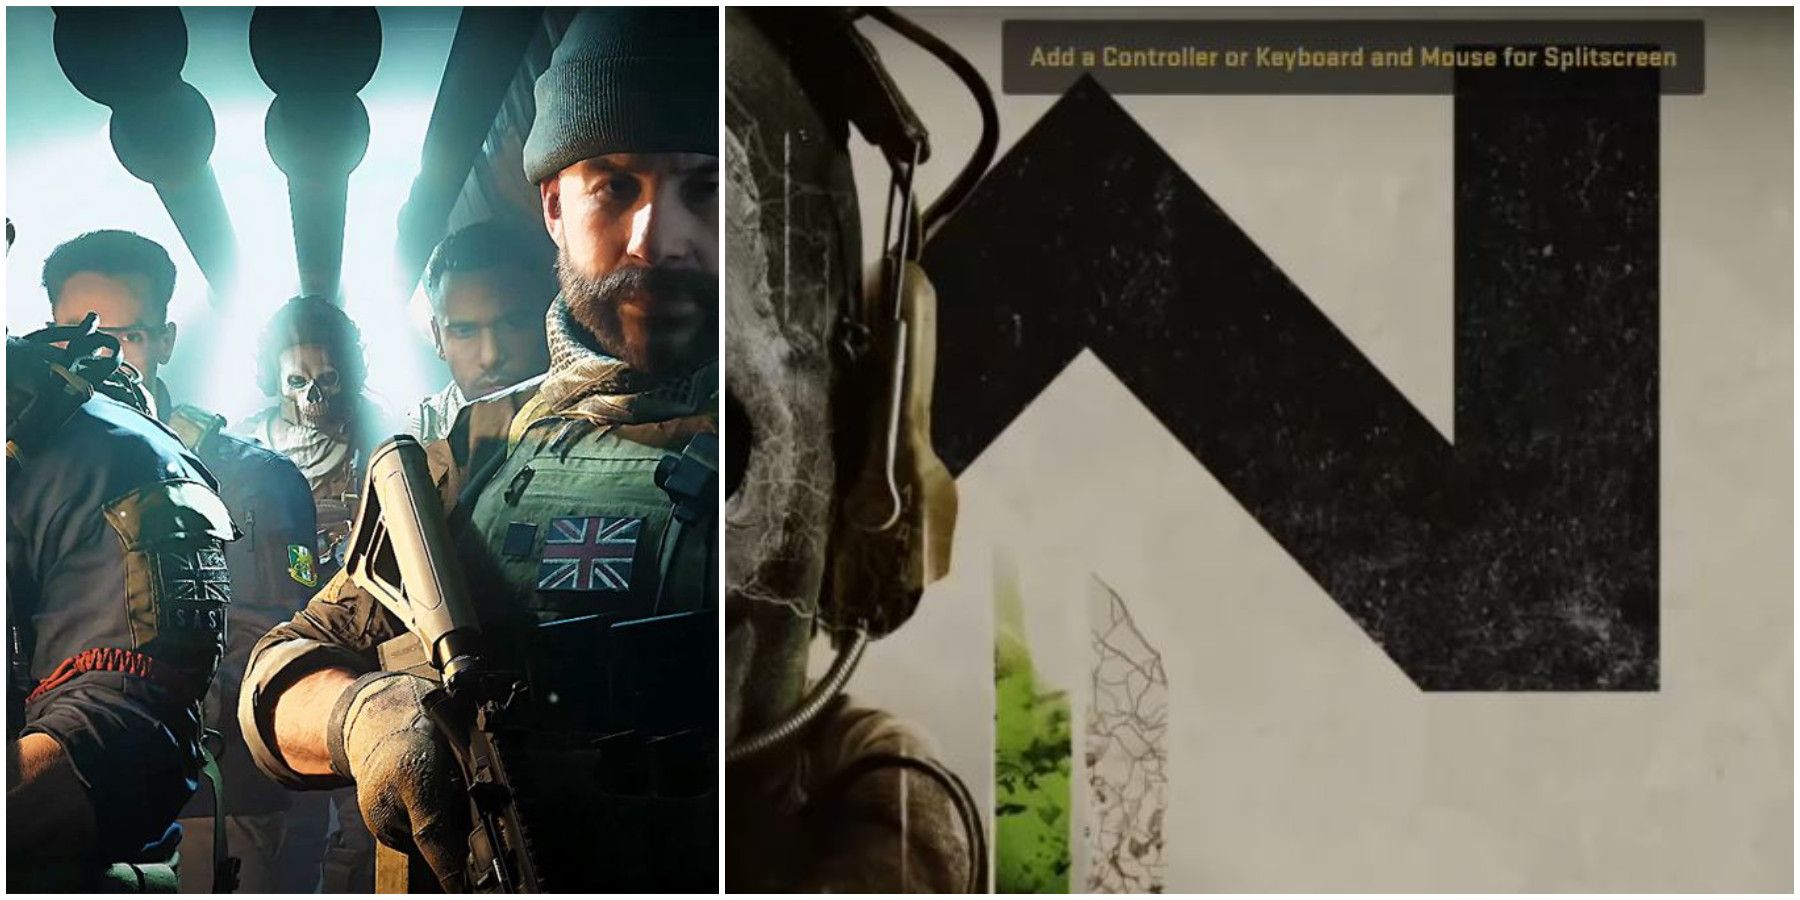 Modern Warfare 2: How Play Split-Screen